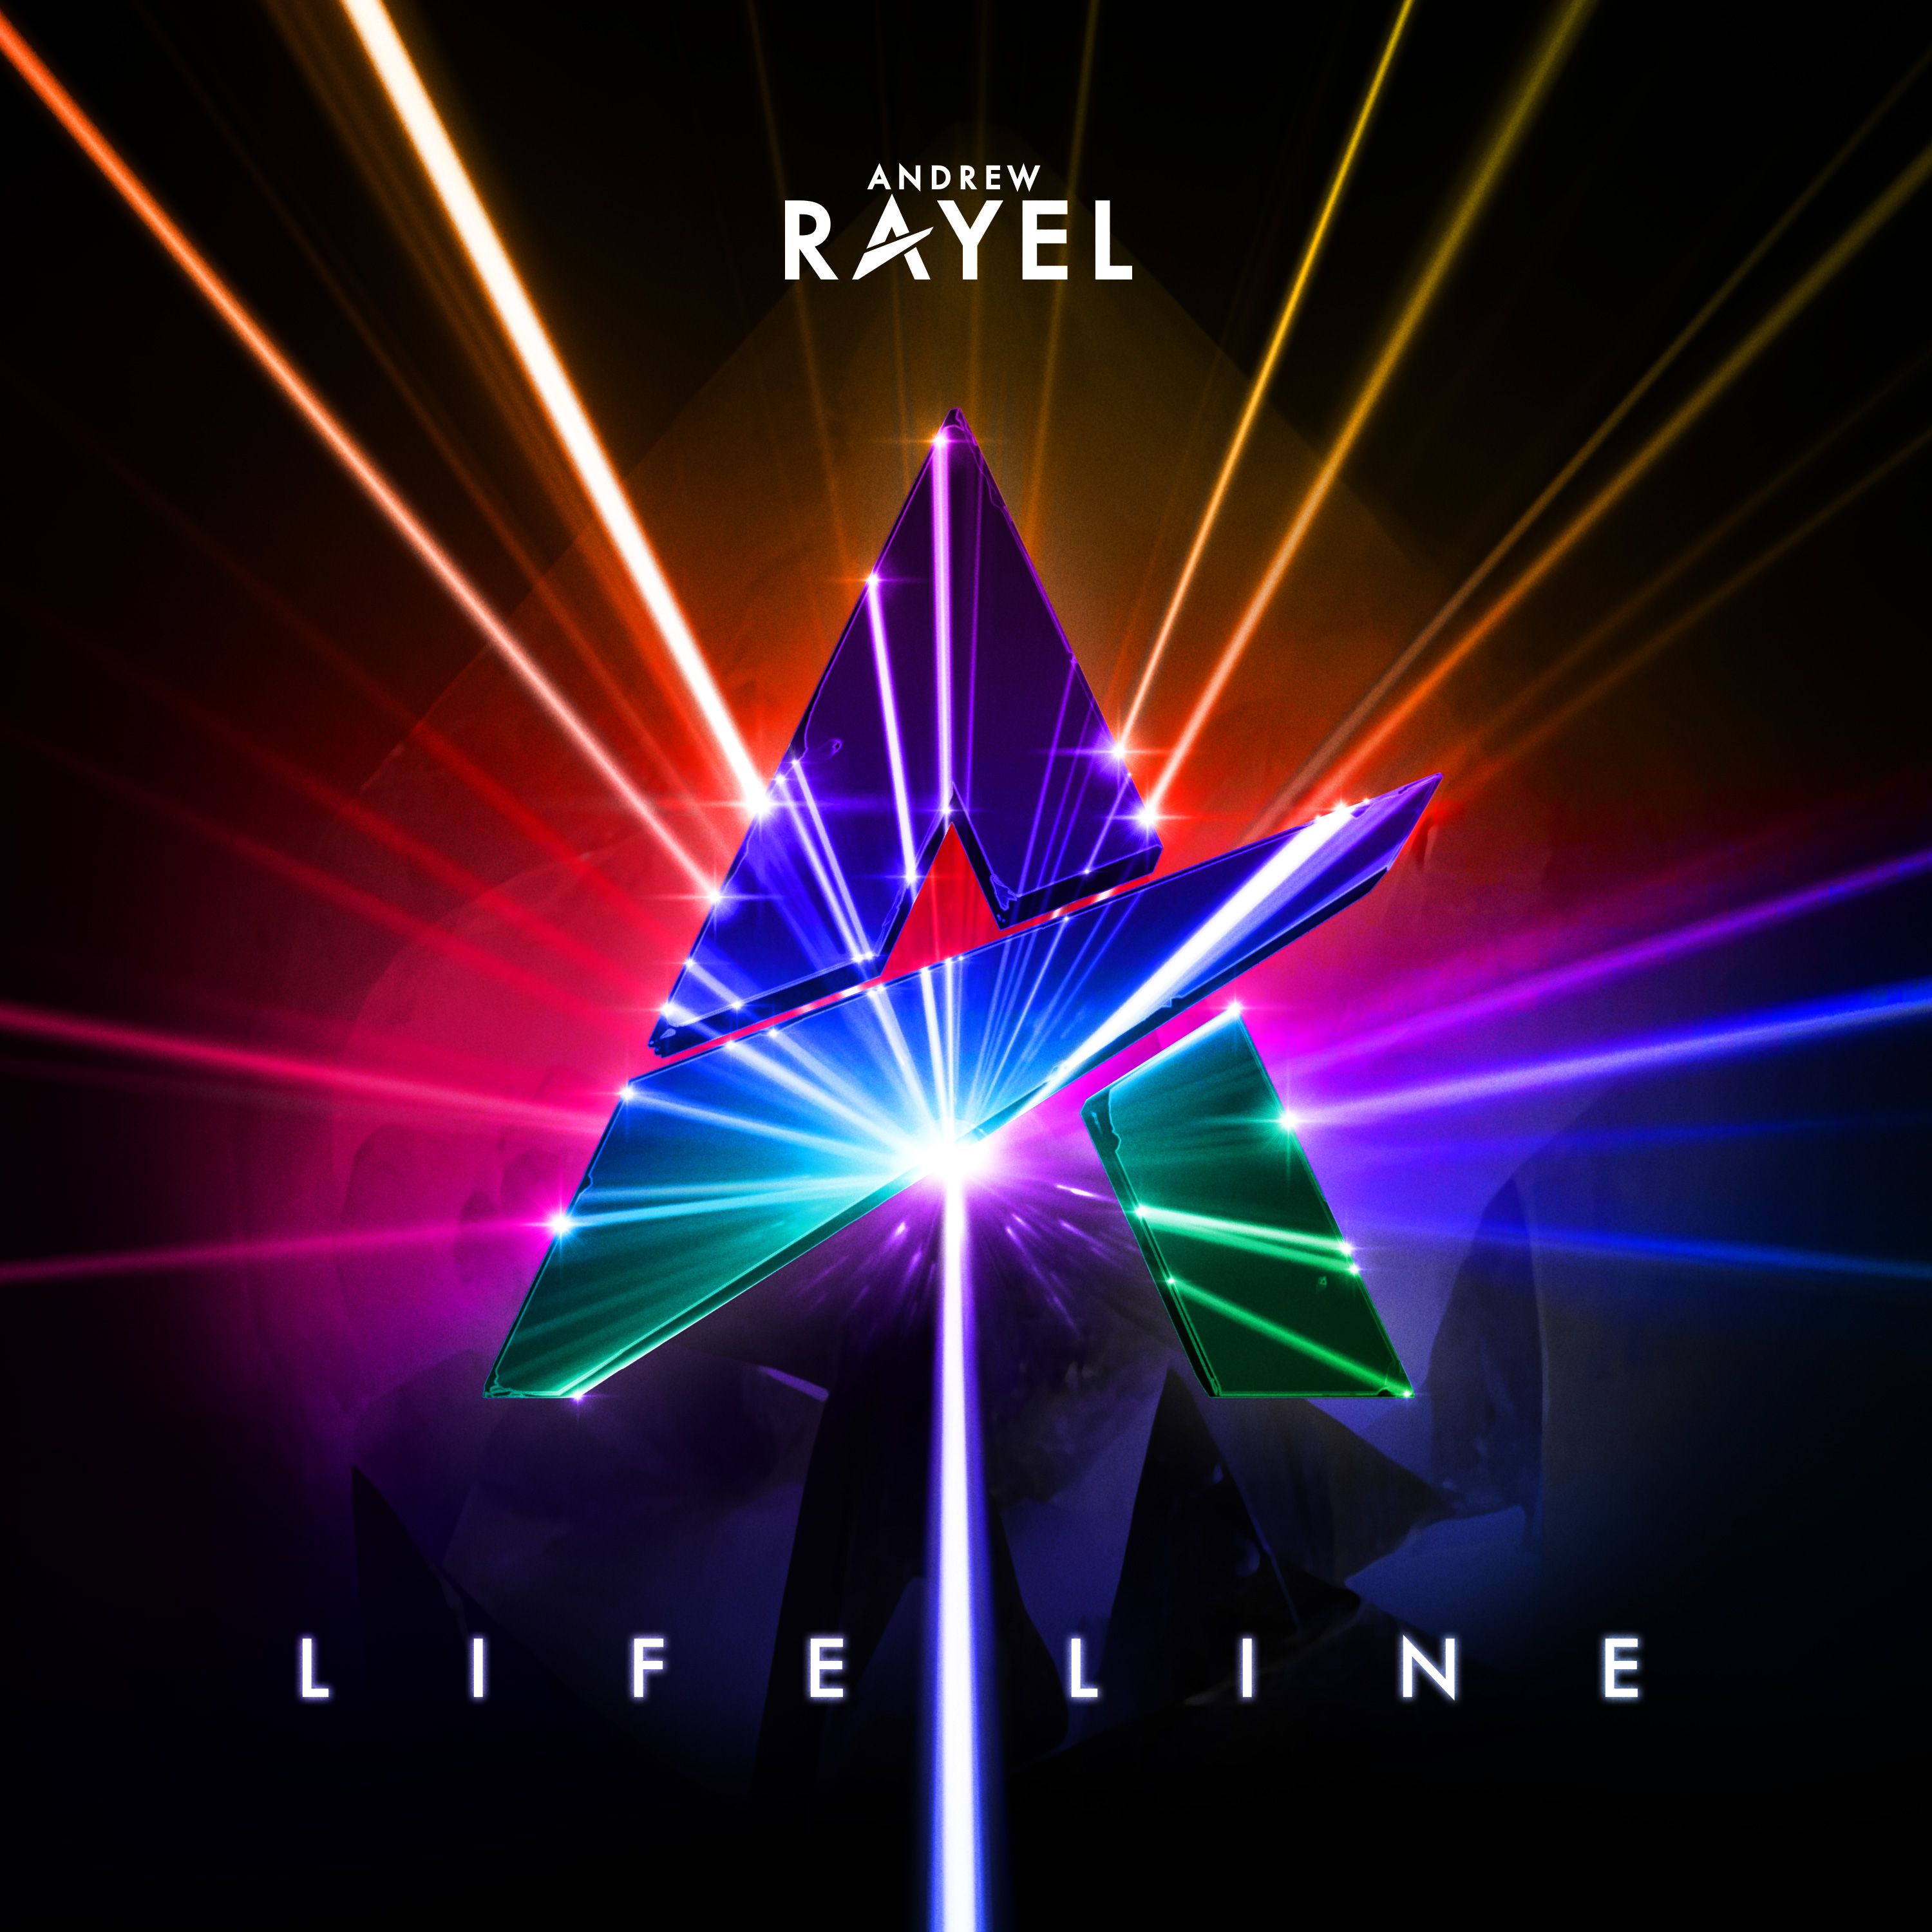 Andrew Rayel Lifeline cover artwork